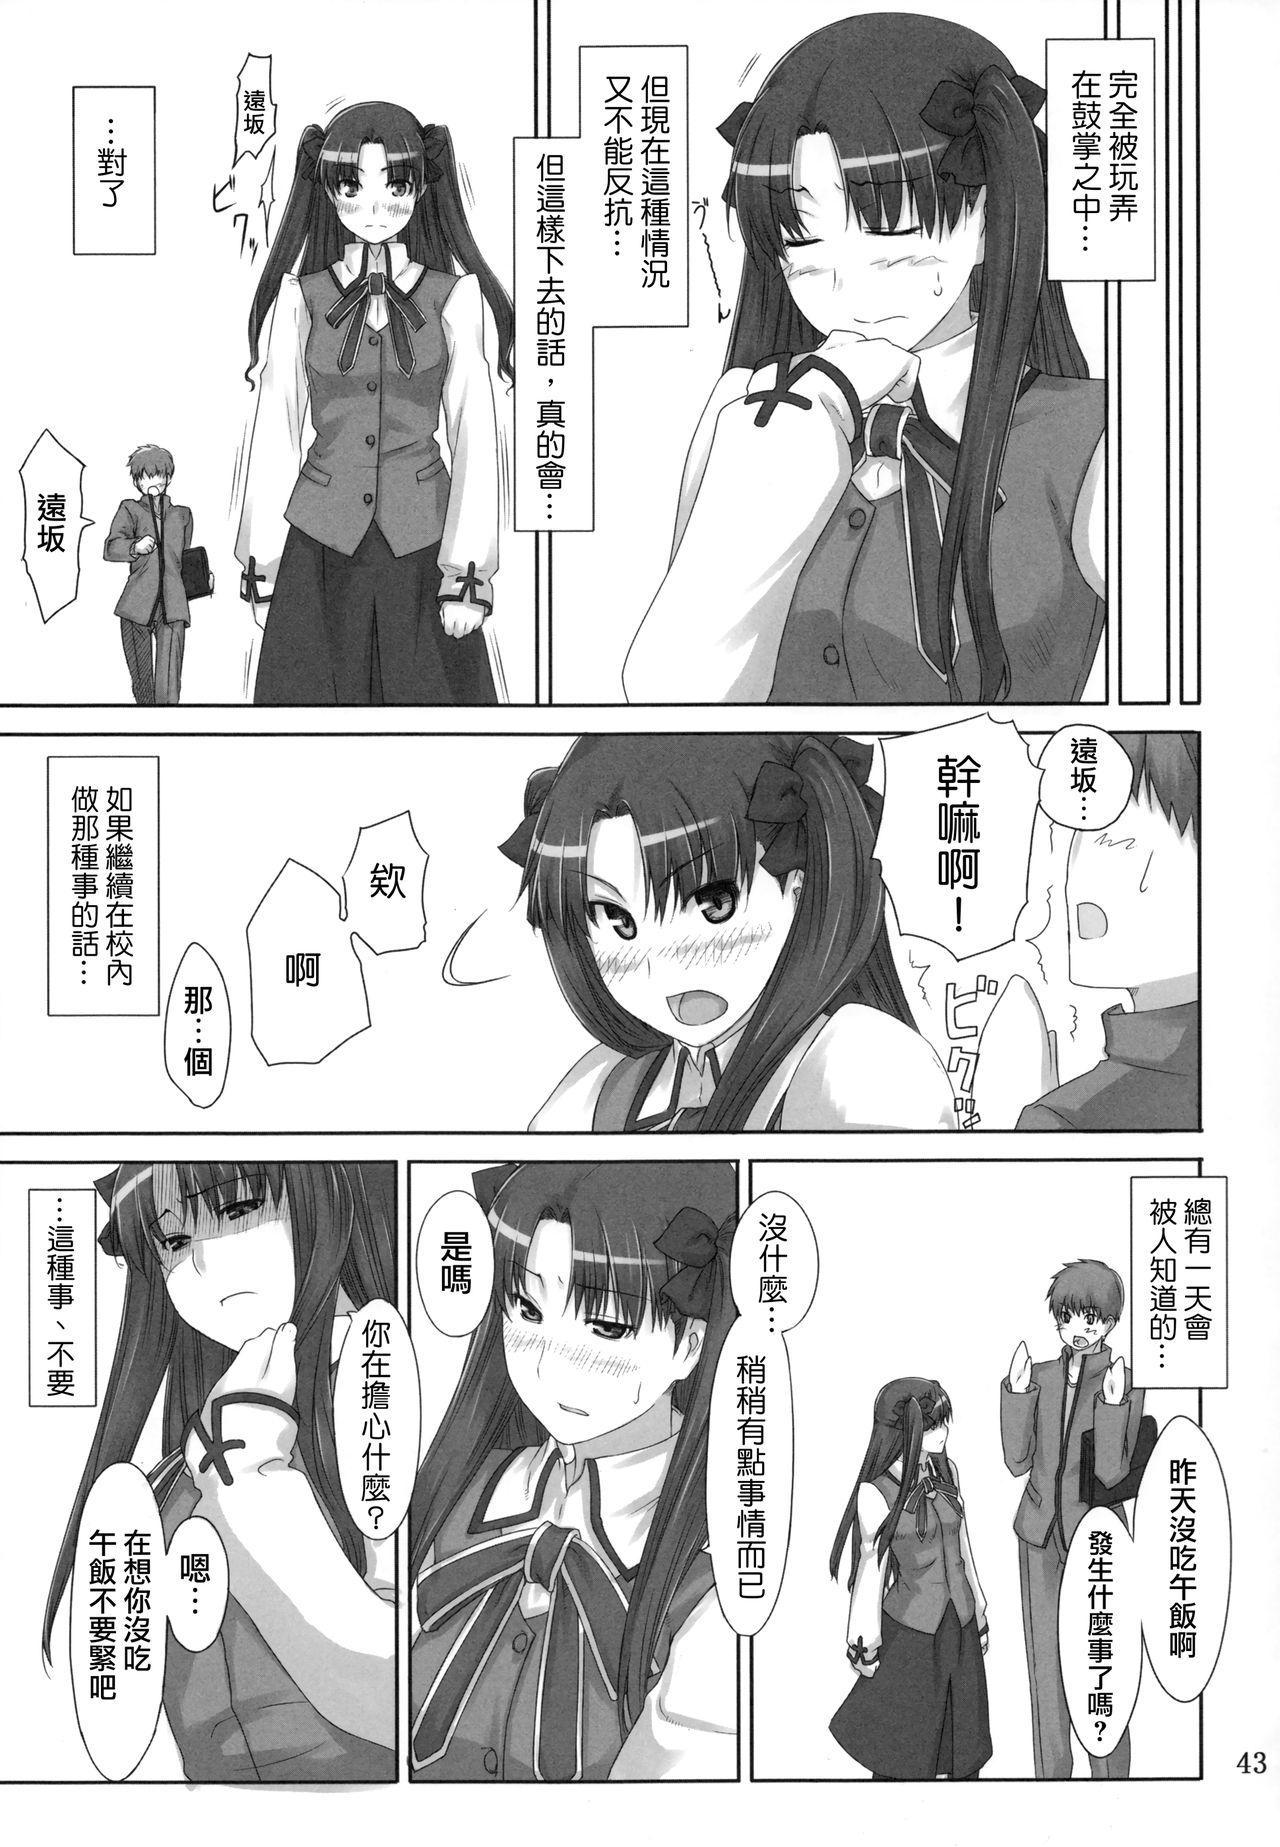 Gros Seins Tohsaka-ke no Kakei Jijou 2 - Fate stay night Cartoon - Page 19